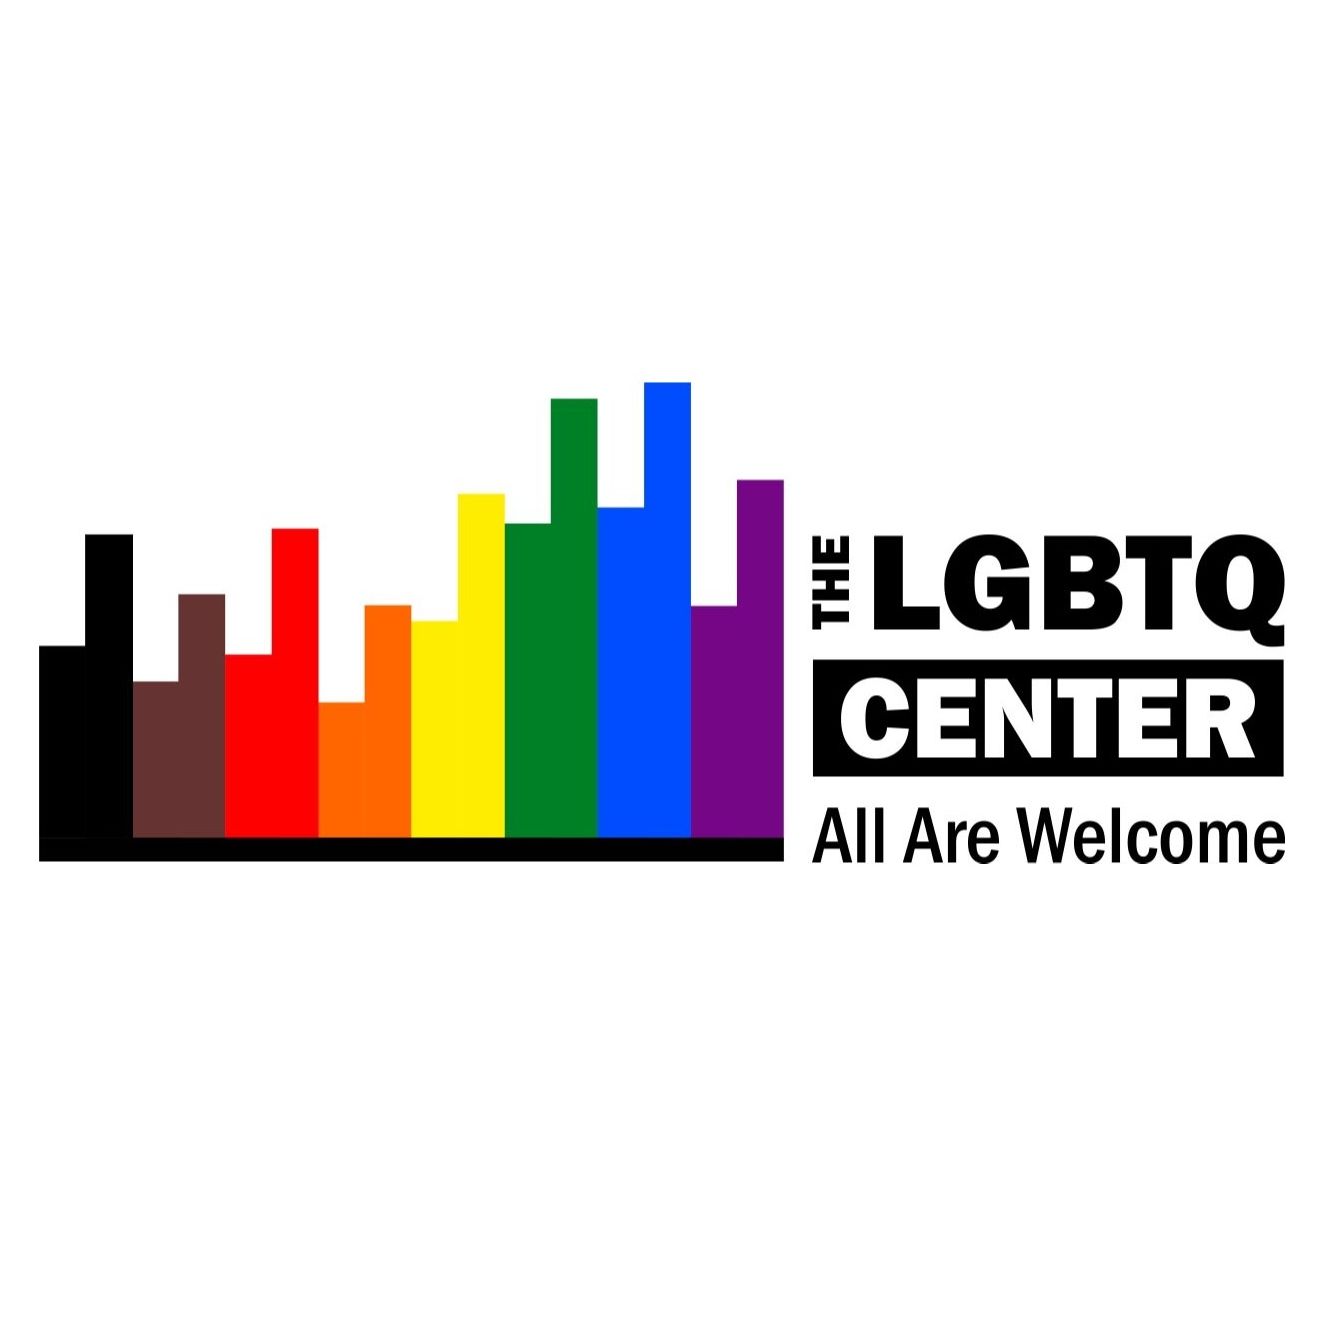 LGBTQ Organizations in Indiana - The LGBTQ Center